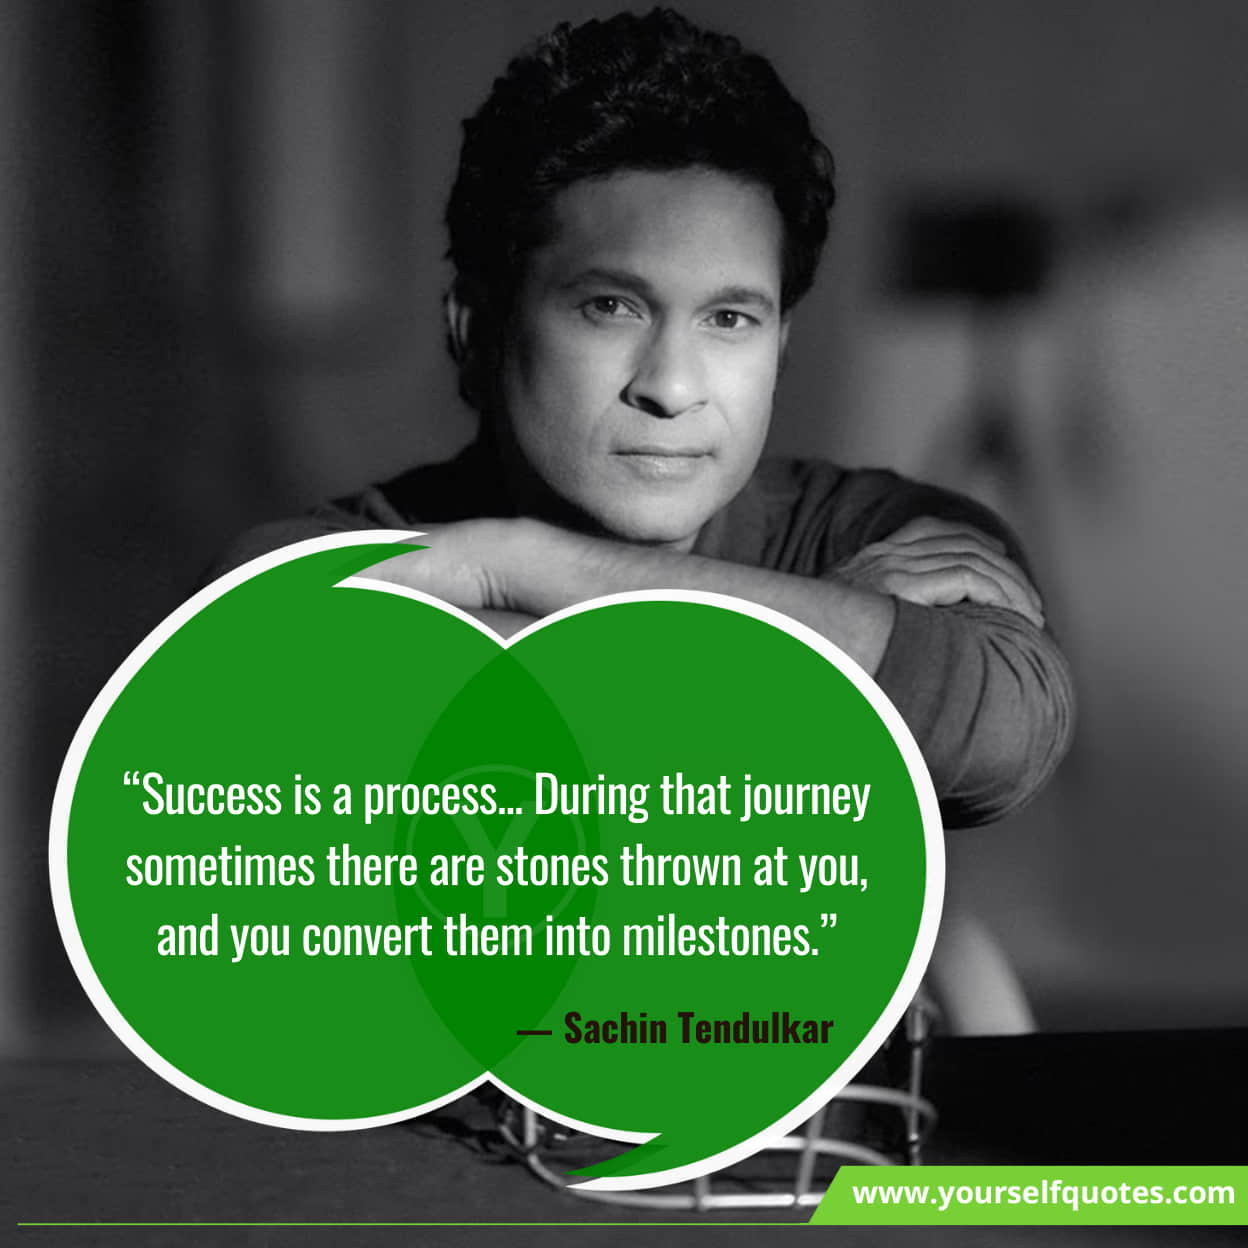 Sachin Tendulkar Quotes On Success